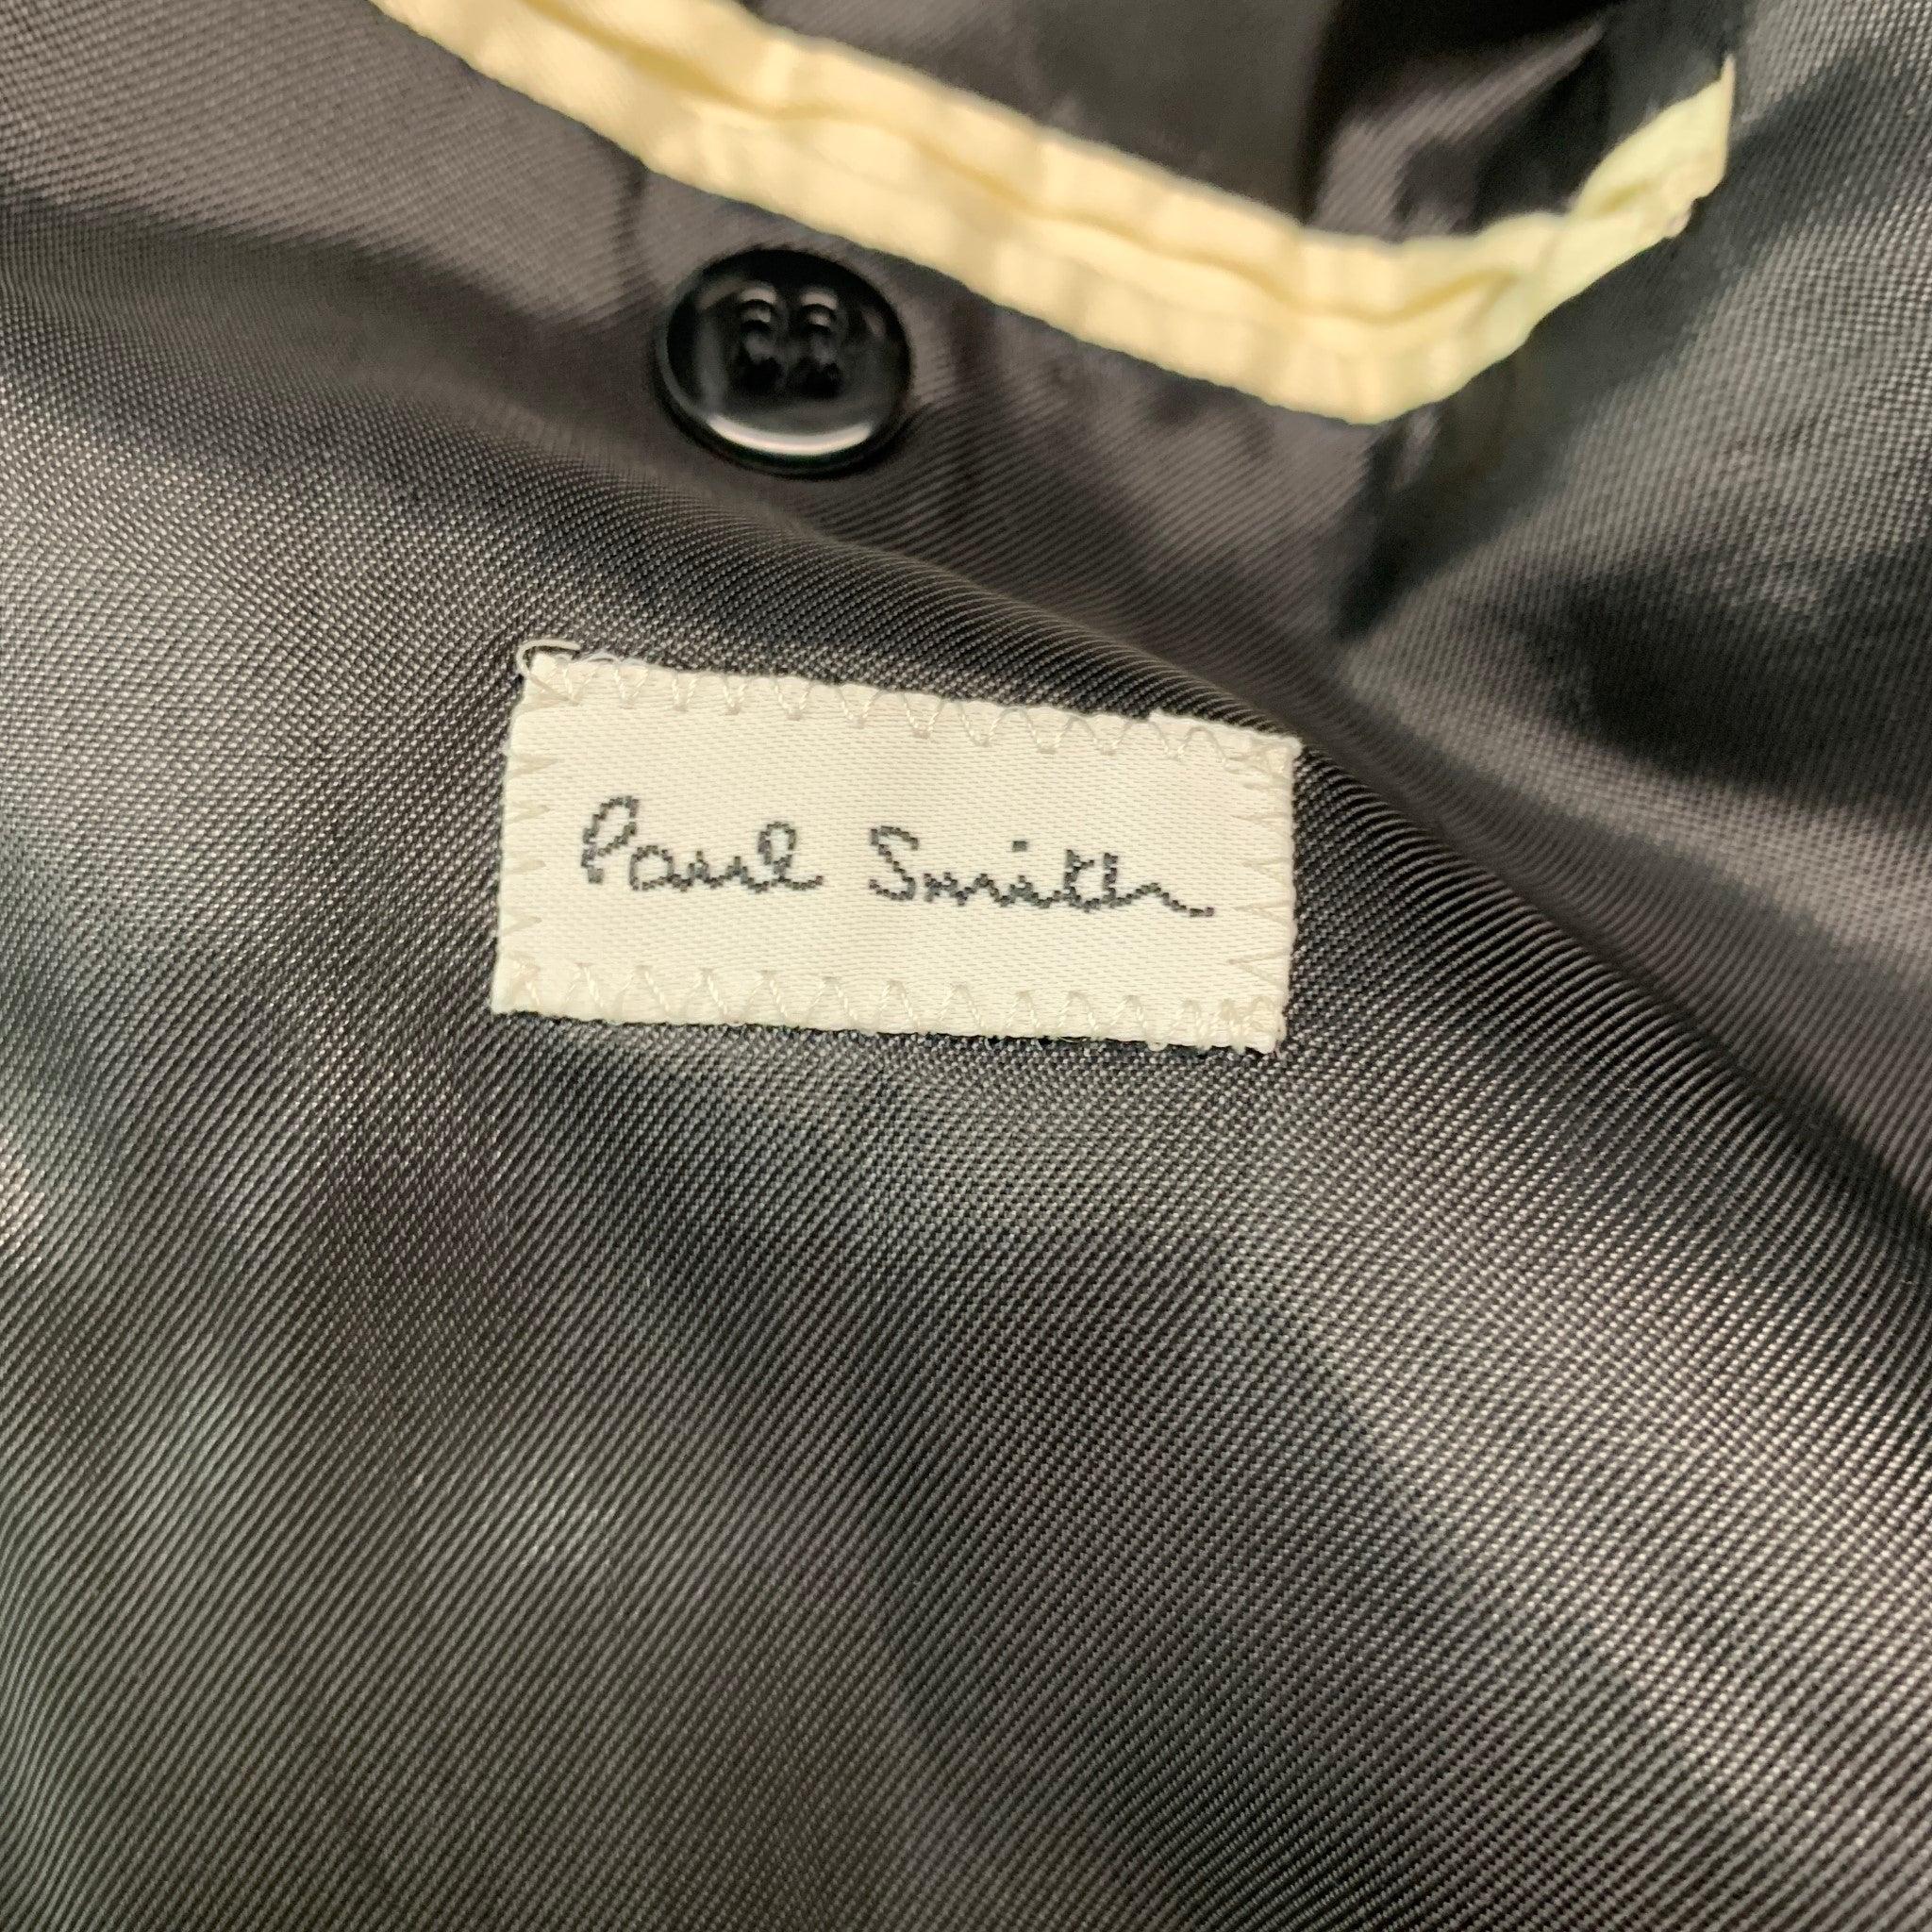 PAUL SMITH Size 46 Black Brown Embroidery Velvet Notch Lapel Sport Coat For Sale 4